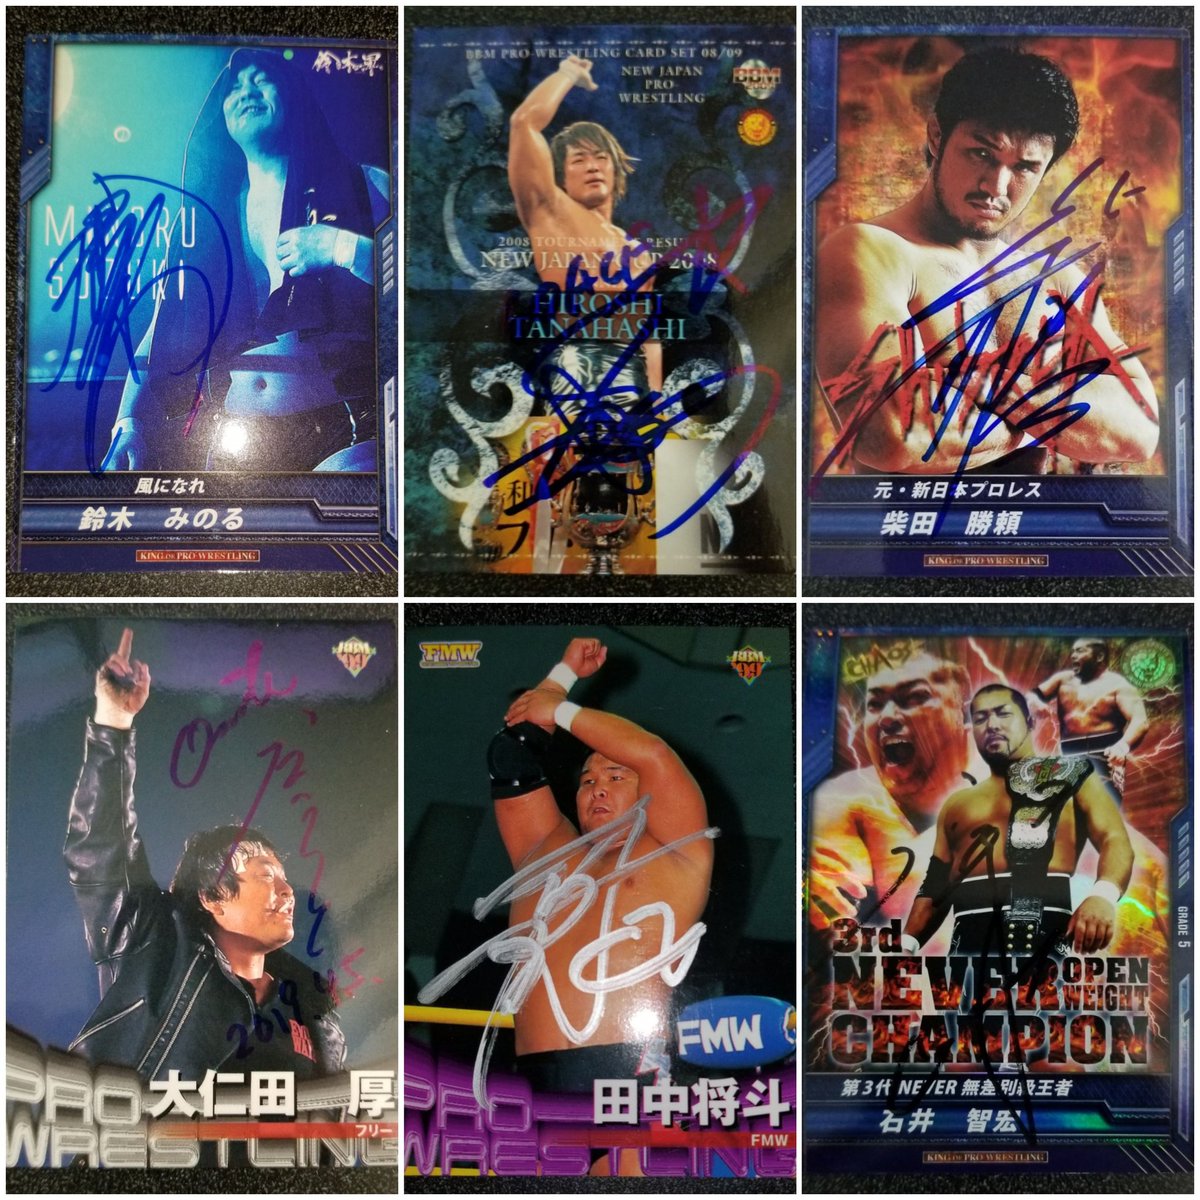 Post 3 of 7 looking at the cards that I got signed at Wrestlecon thewrestlinginsomniac.com/2019/04/signed… #tanahashi, #shibata #minorusuzuki #atsushionita #masatotanaka #tomohiroishii